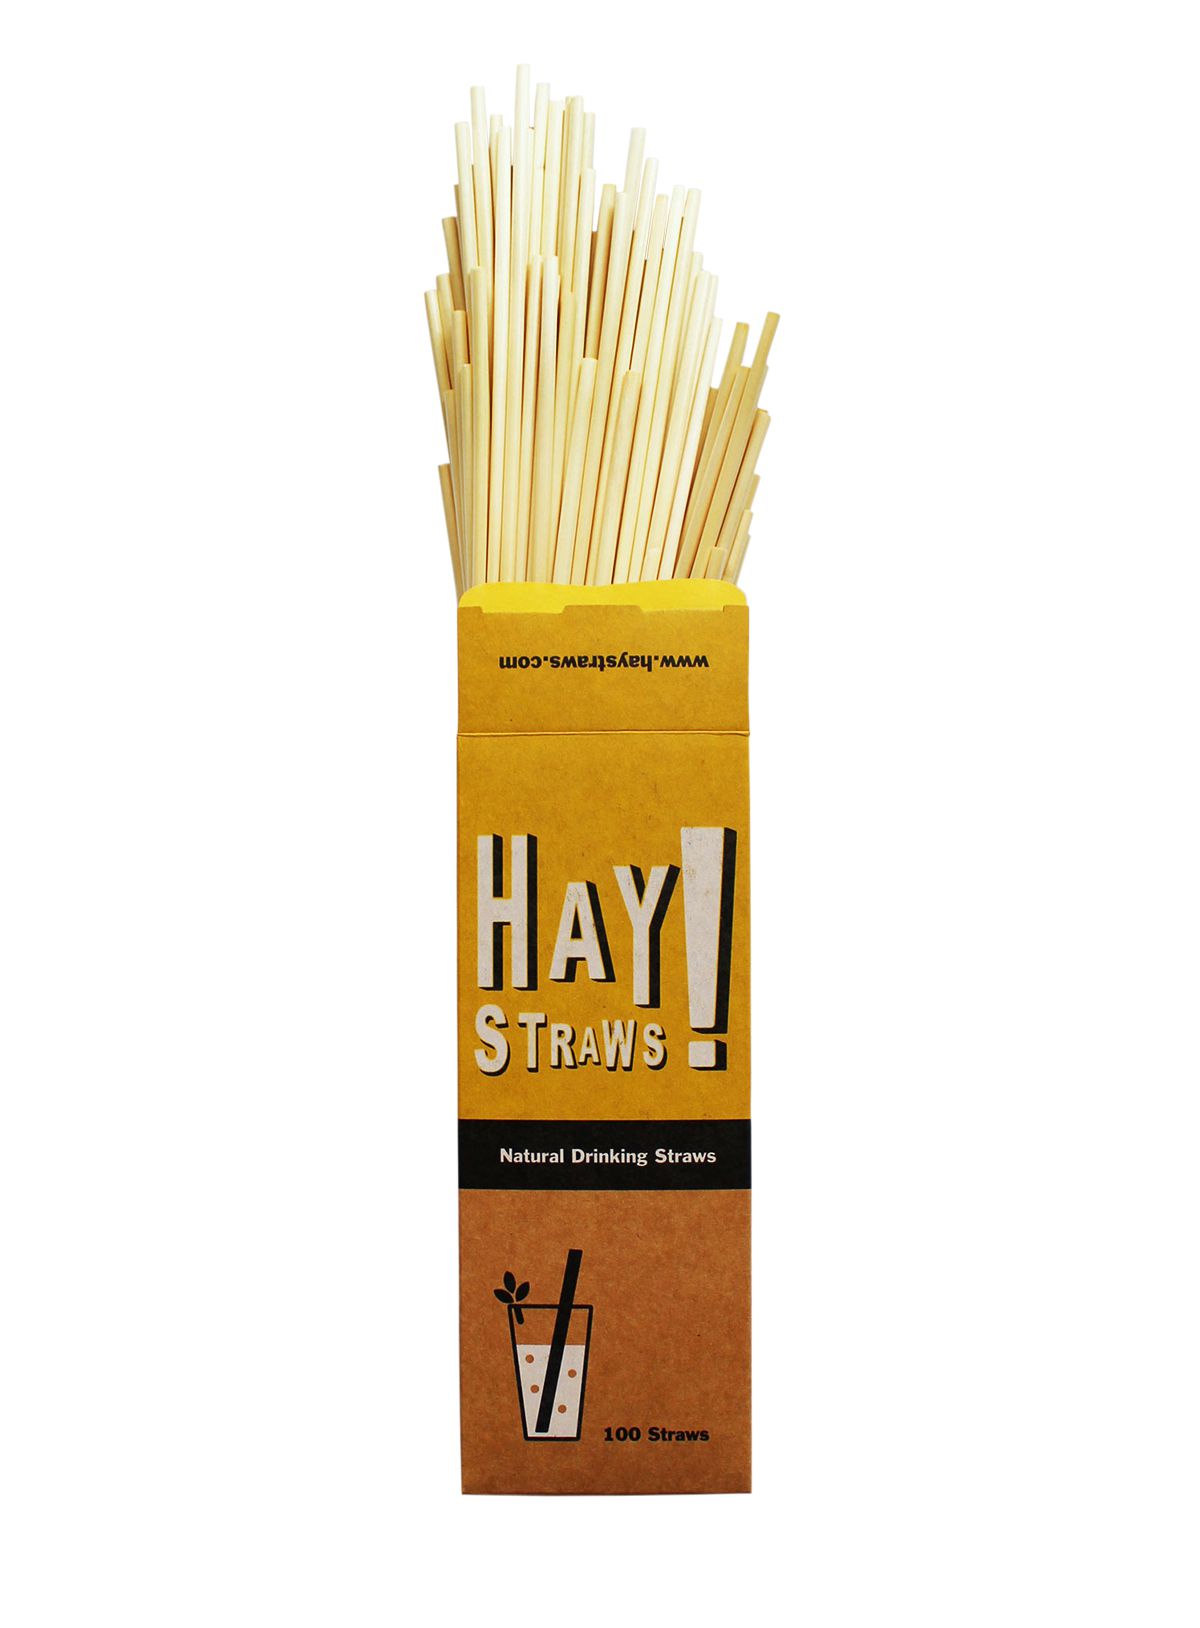 SINGLE-USE PLASTIC ALTERNATIVES: Hay! Straws&nbsp;